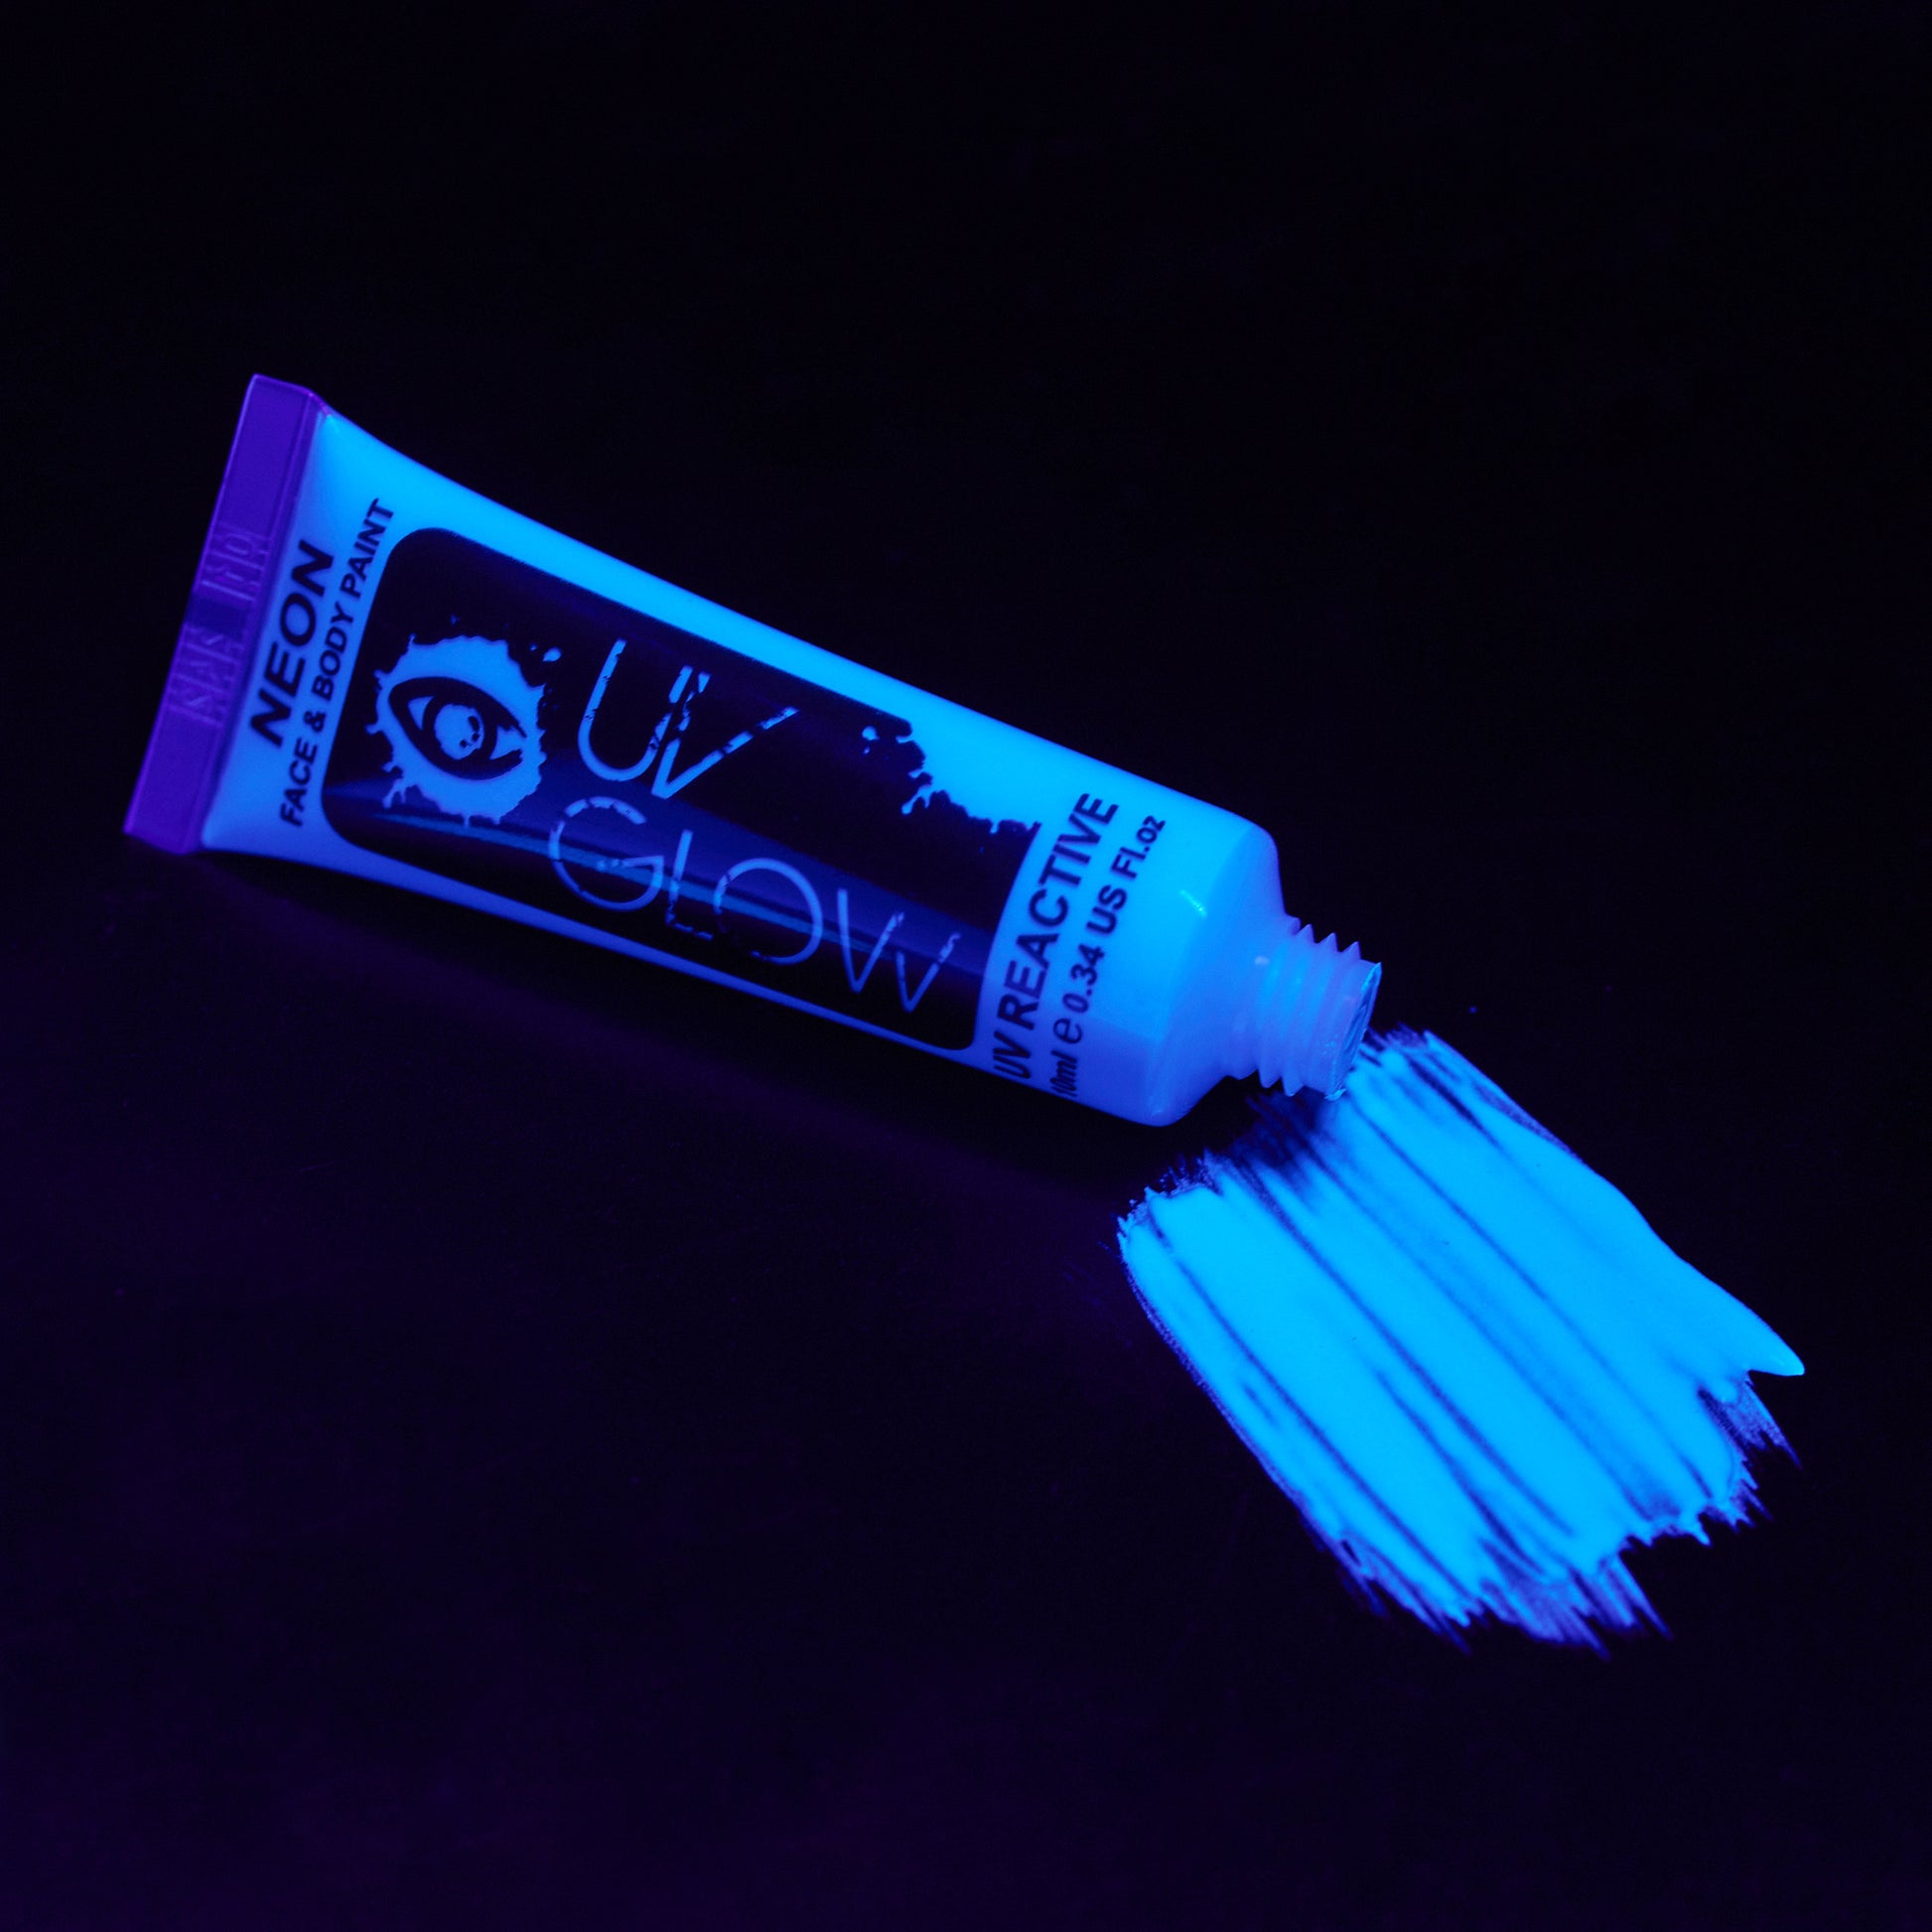 Neon UV Face & Body Paint 10ml by UV Glow